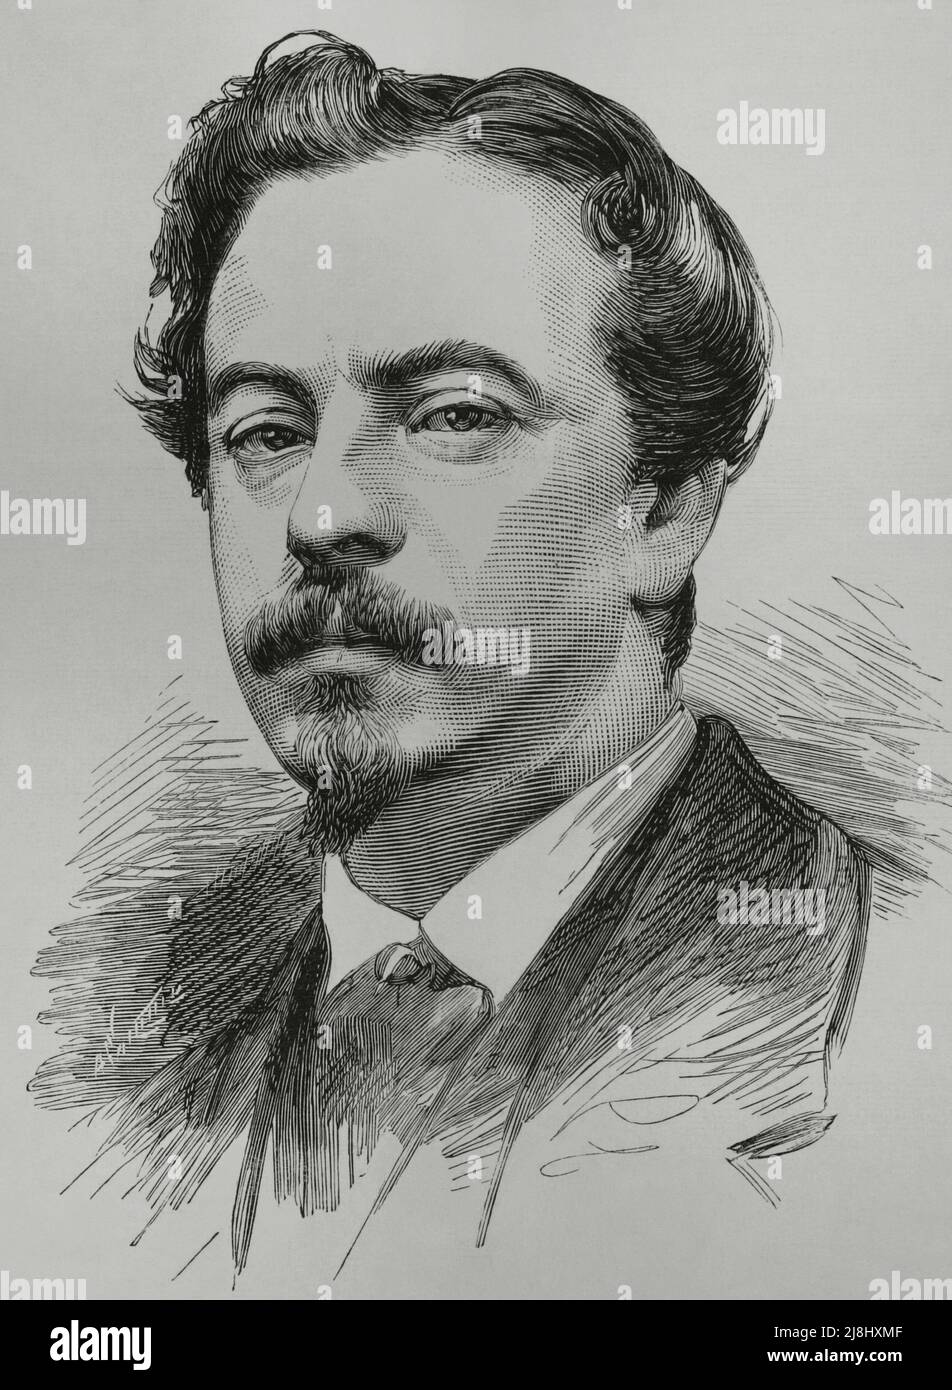 Ignacio Suarez Llanos (1830-1881). Spanischer Maler und Illustrator des 19.. Jahrhunderts. Hochformat. Gravur, 1882. Stockfoto